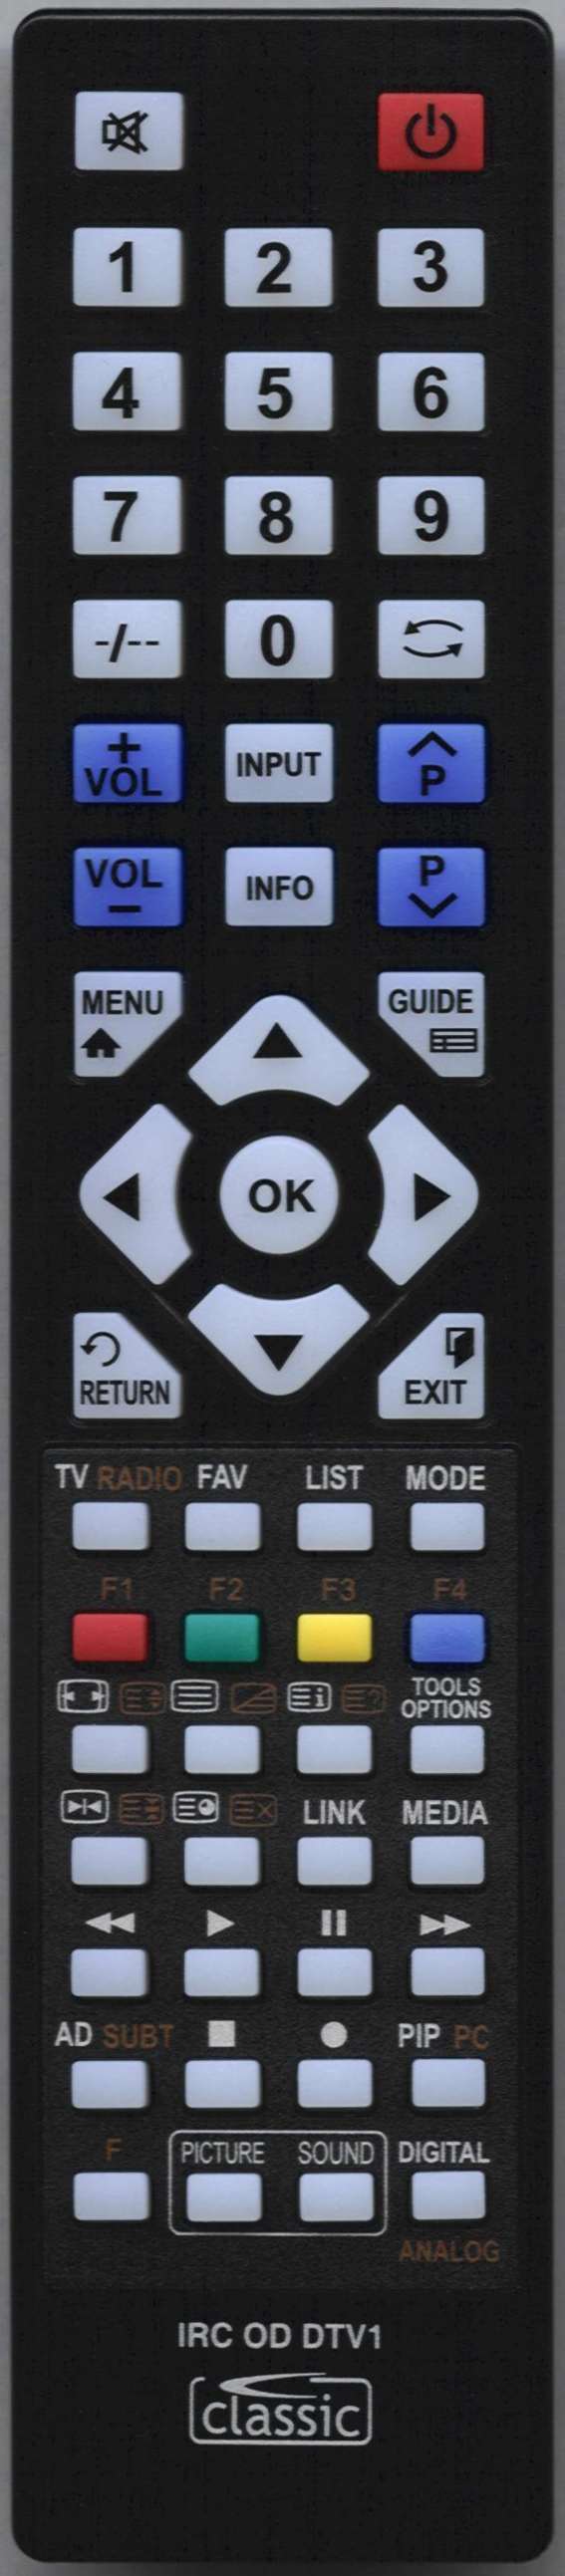 DIGITREX CFD1971-A Remote Control